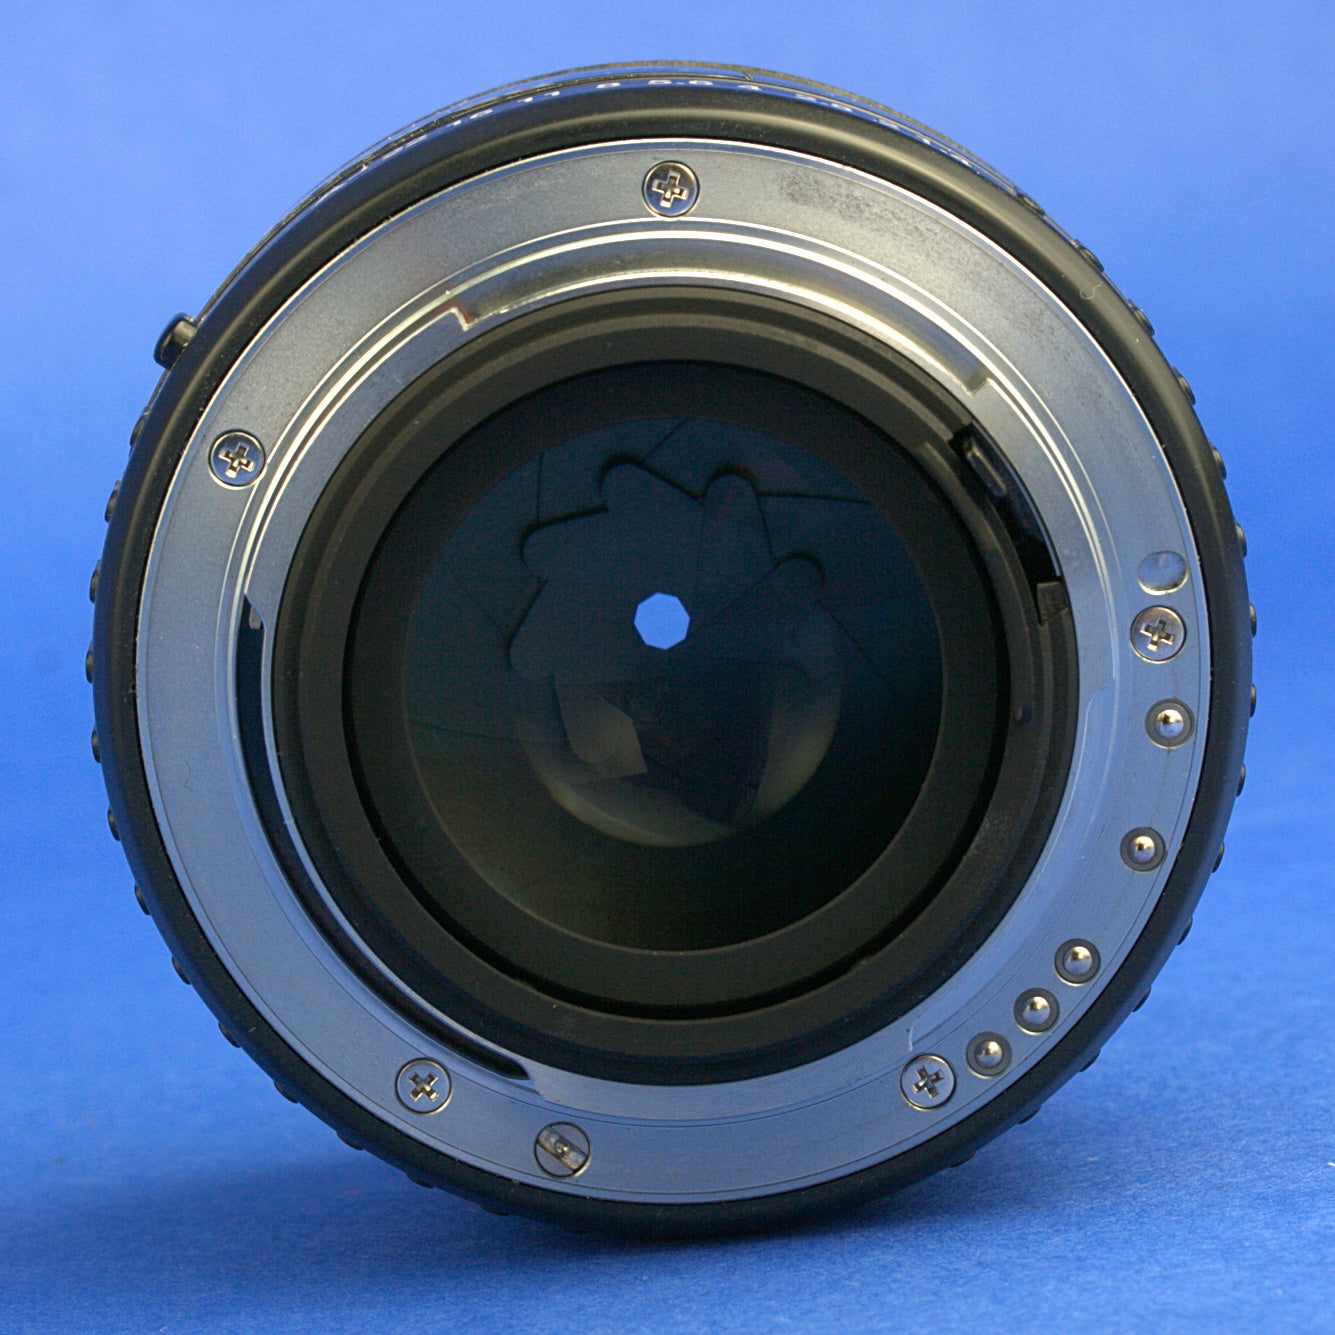 Pentax-FA 50mm 1.4 Lens